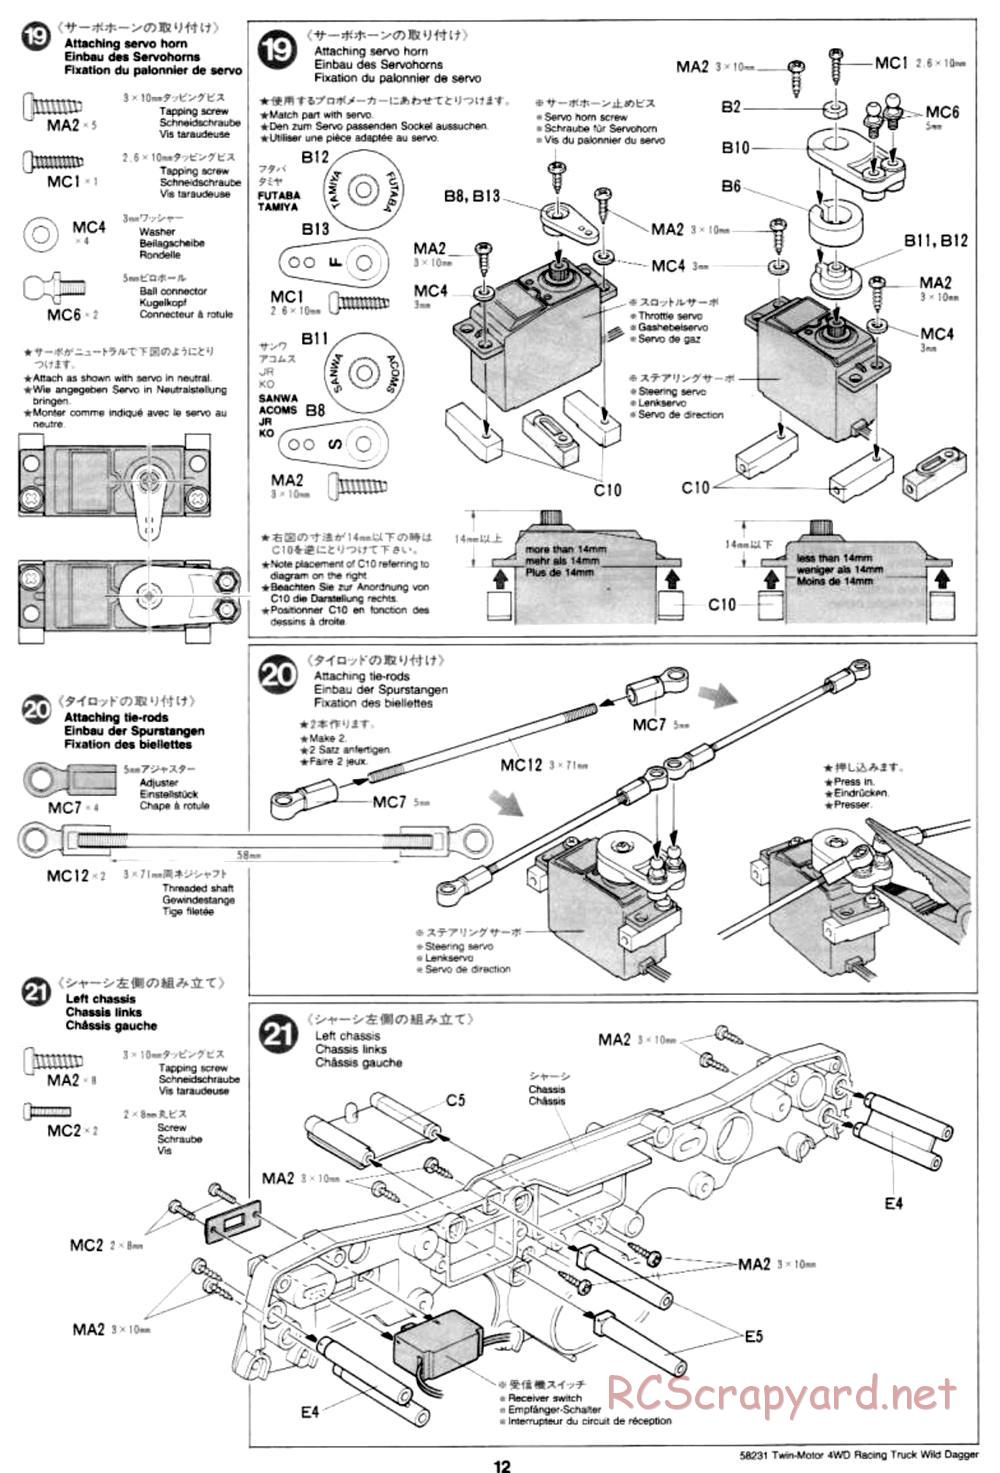 Tamiya - Wild Dagger - WR-01 Chassis - Manual - Page 12